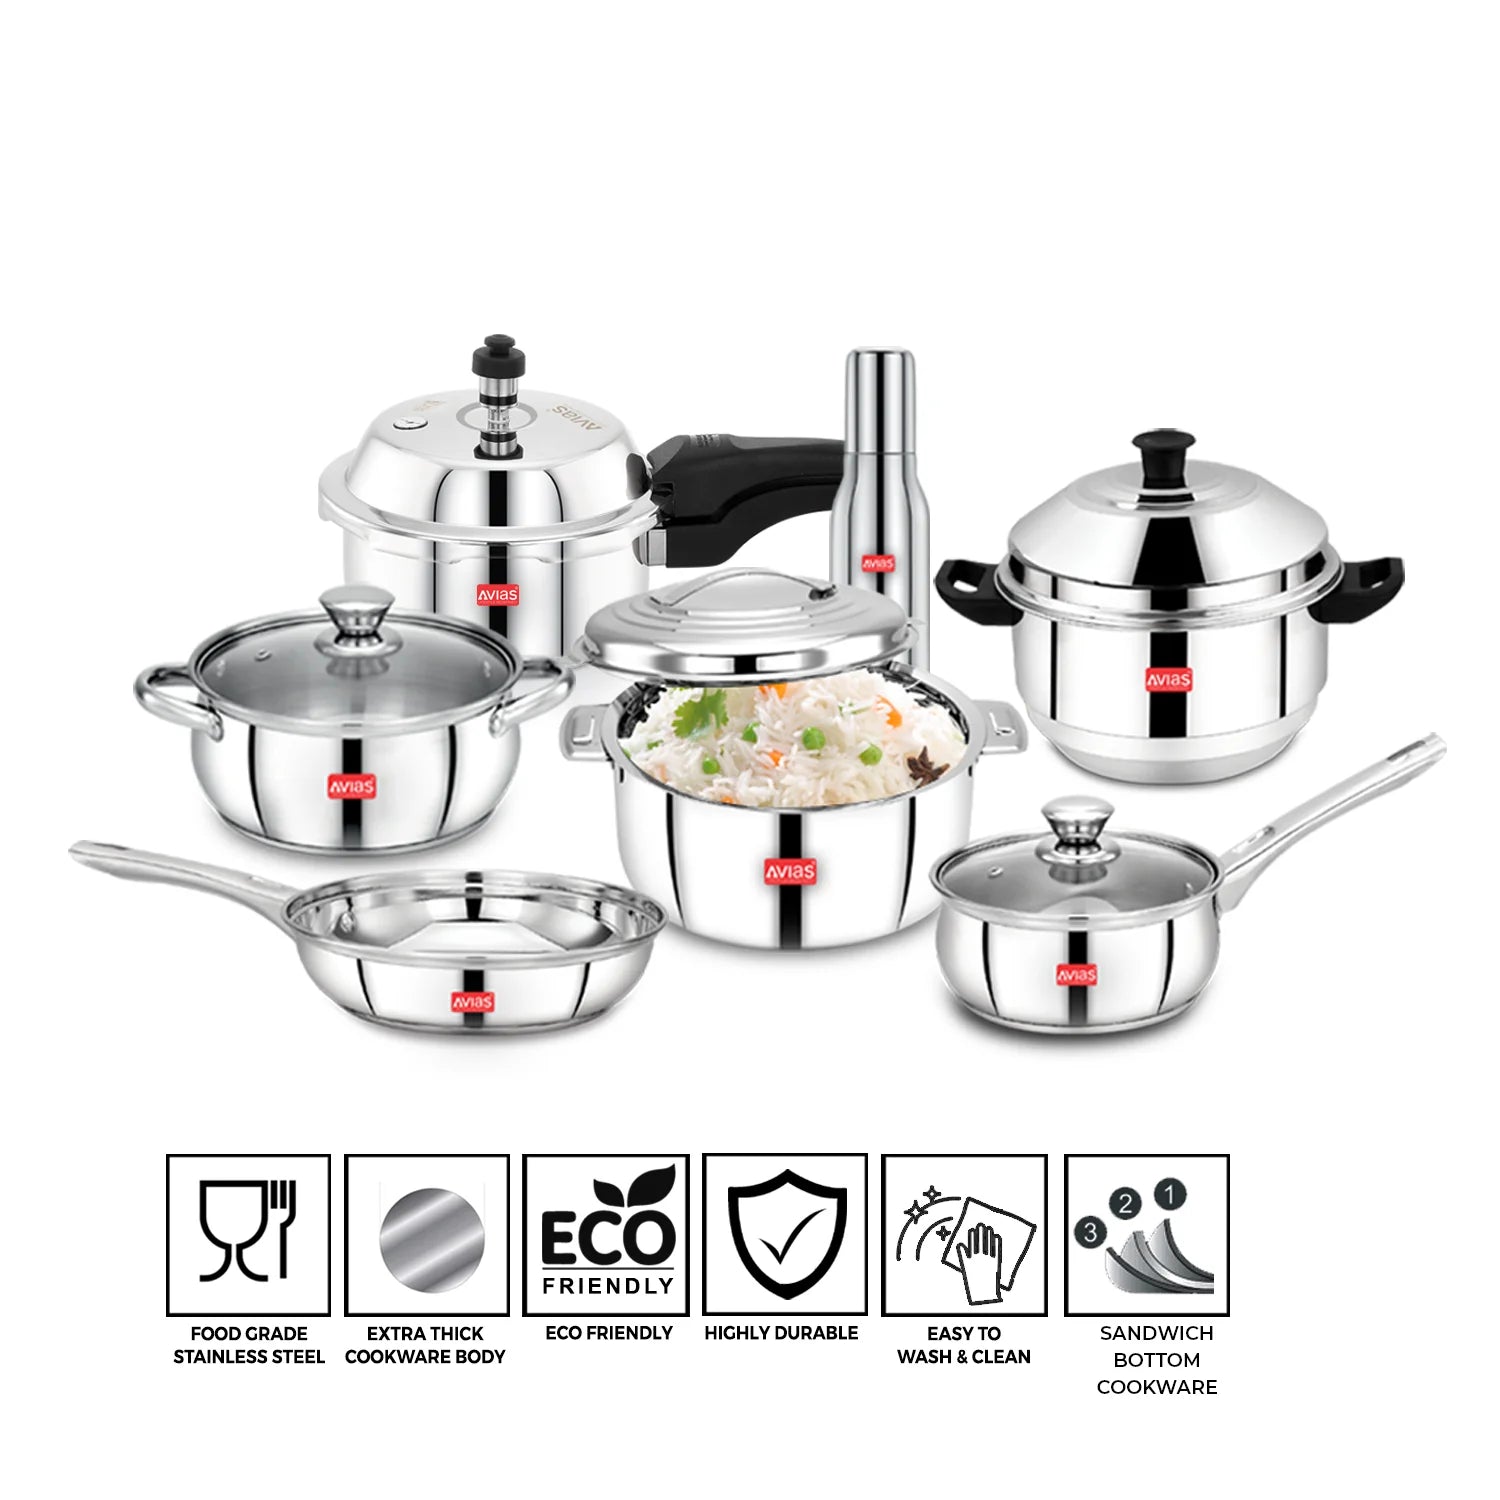 Avias Stainless Steel kitchenware/ cookware 7 PCS Kitchen set